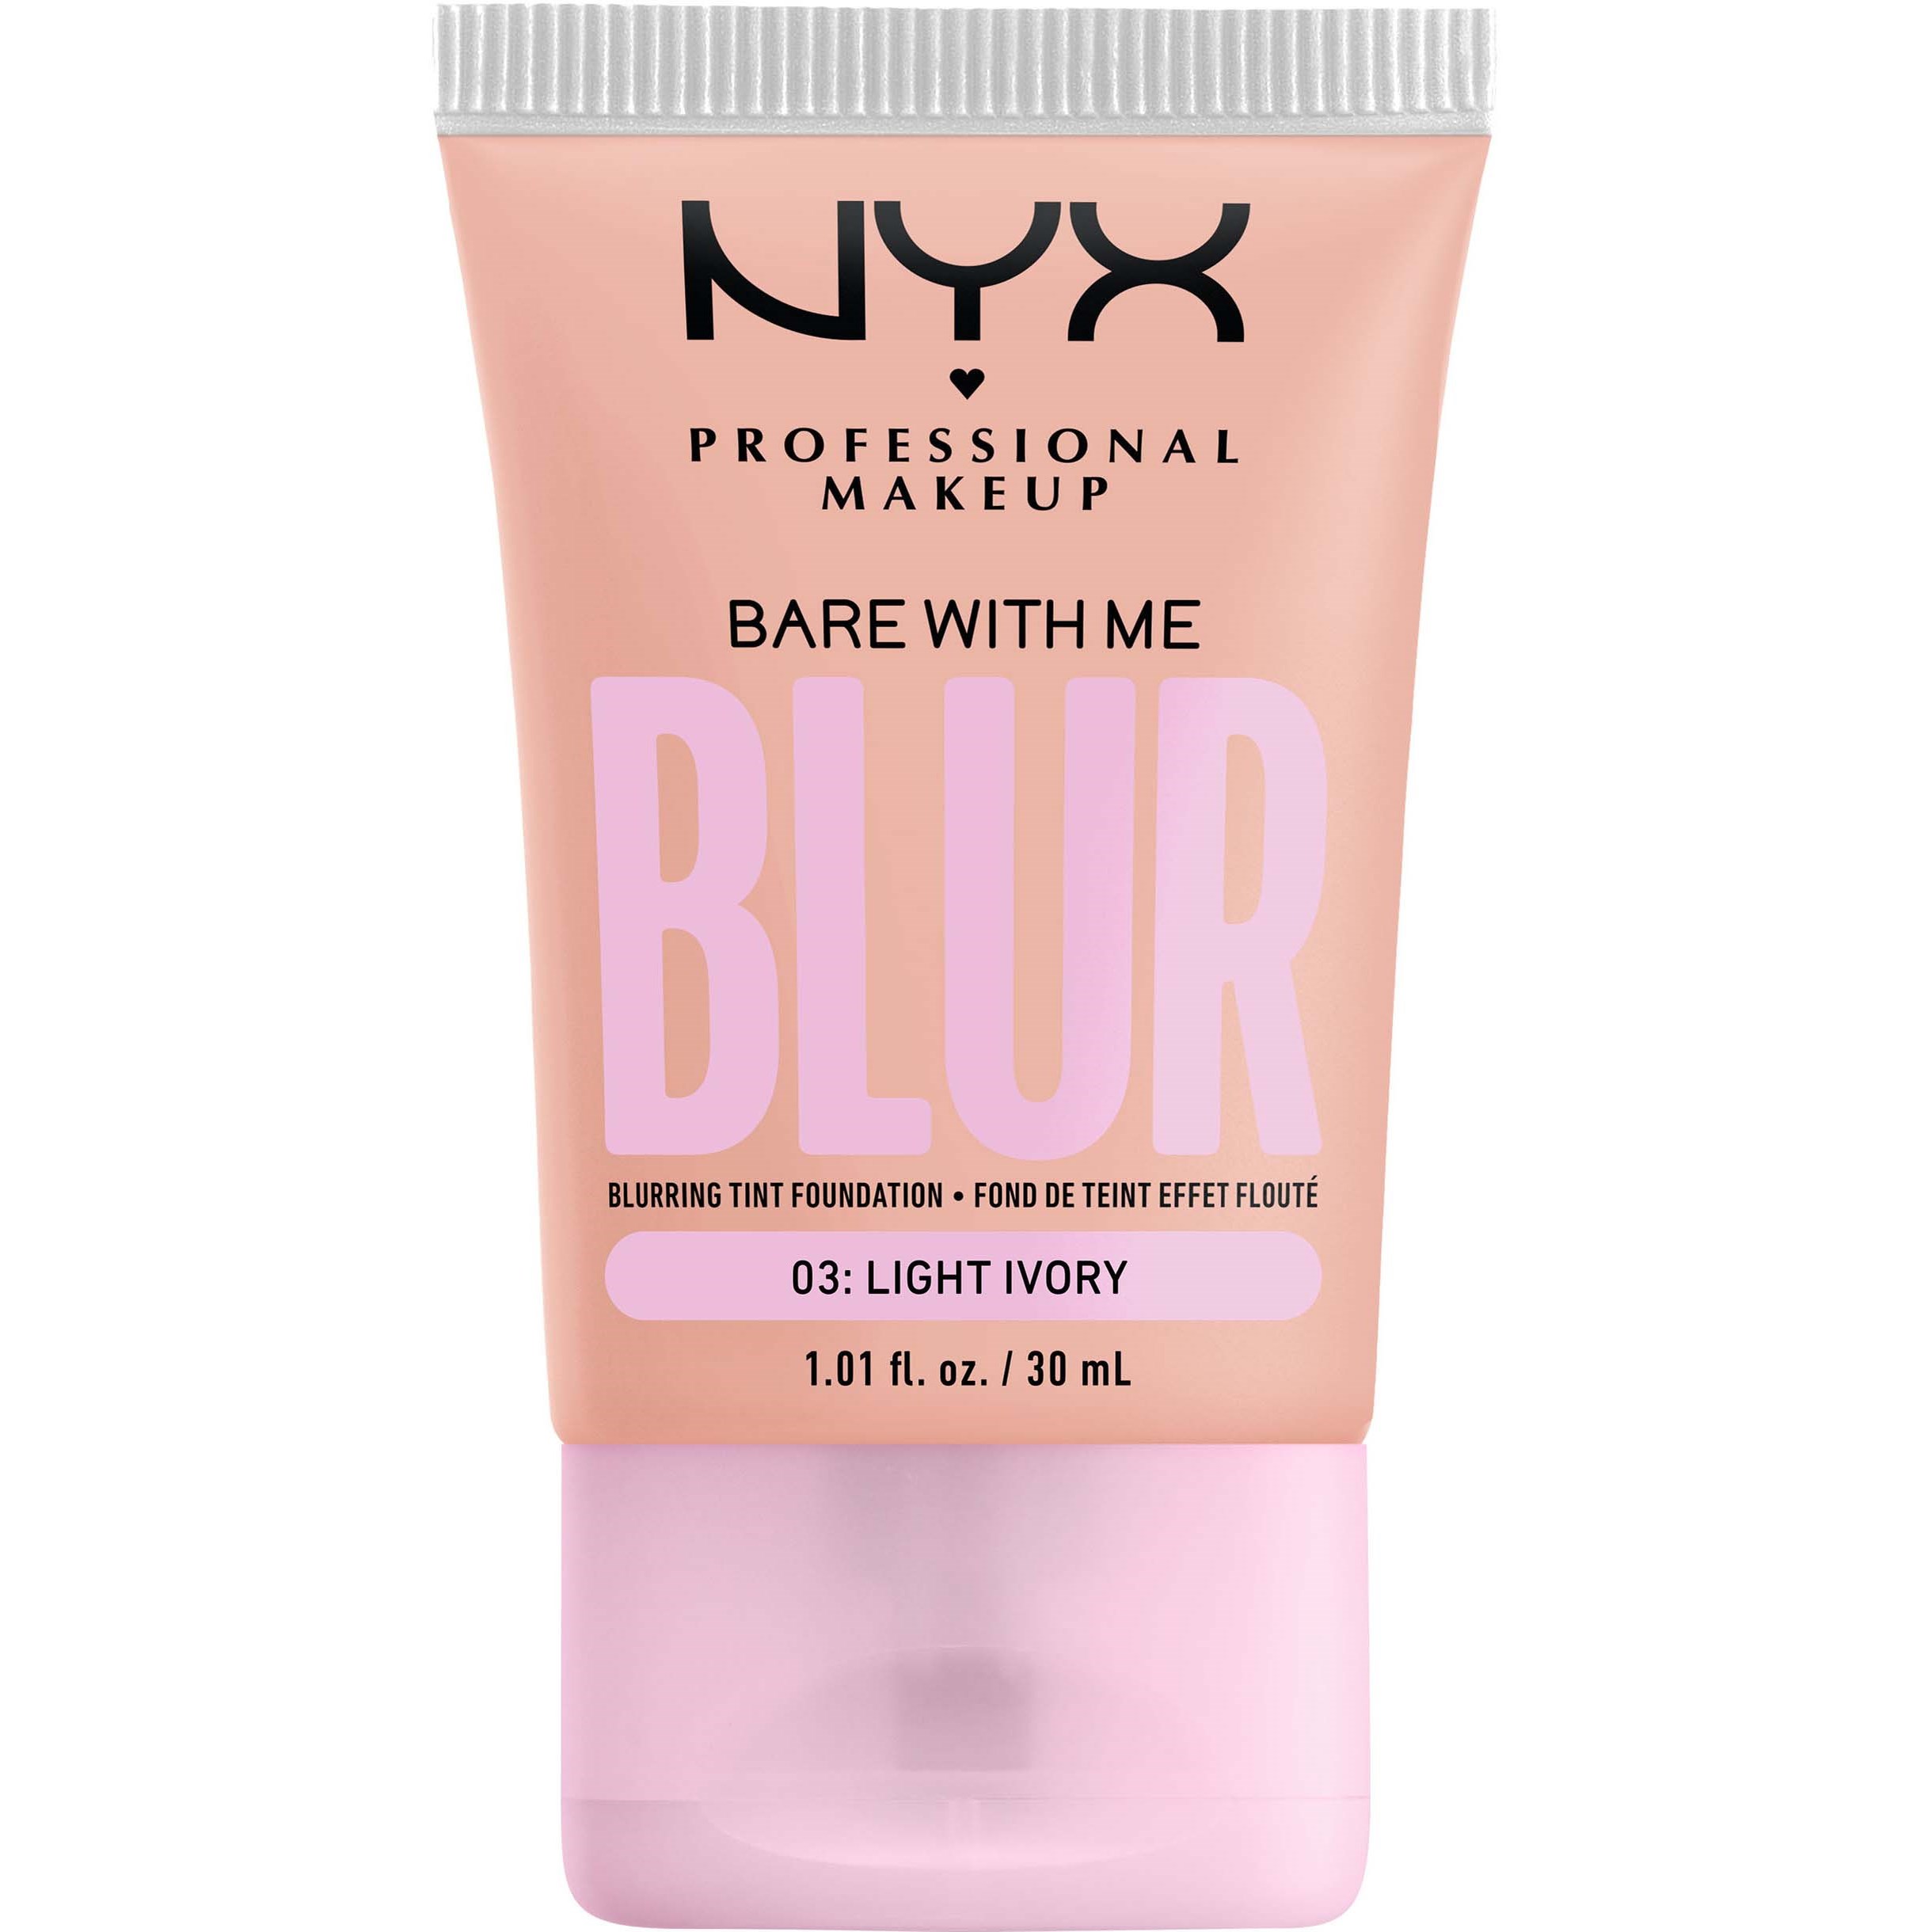 Bilde av Nyx Professional Makeup Bare With Me Blur Tint Foundation 03 Light Ivo